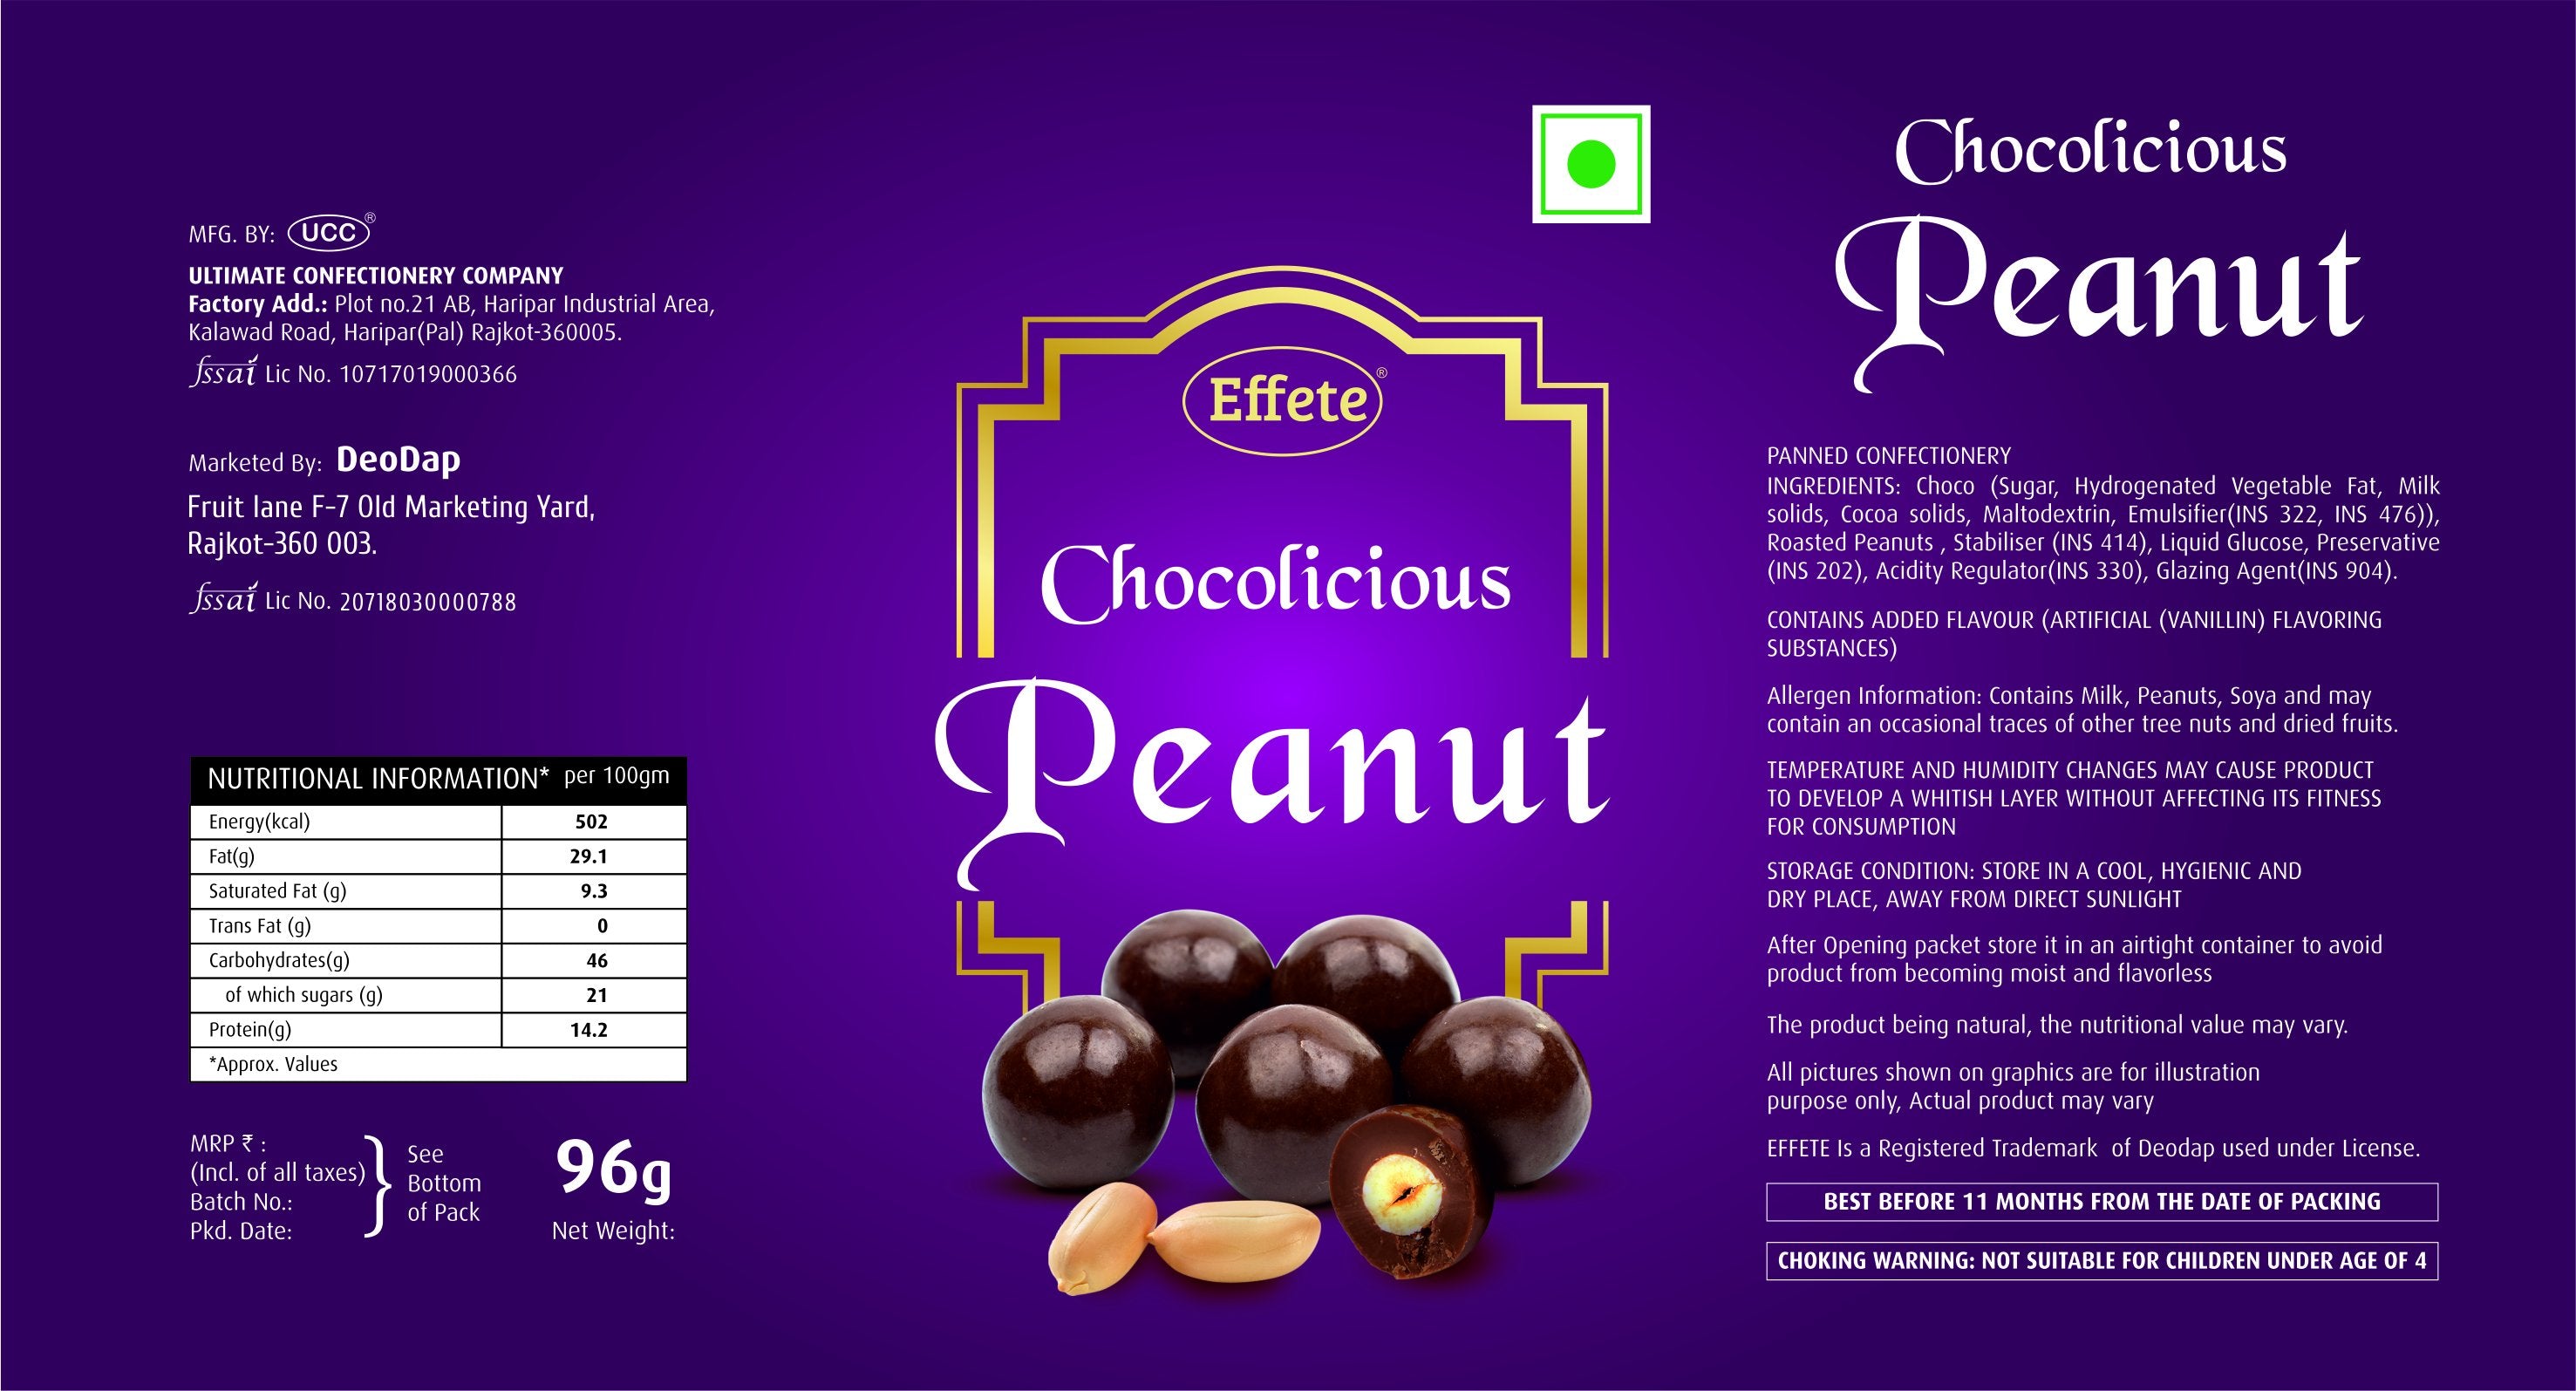 0047 Effete Peanut Chocolate (96 Gms) - SkyShopy